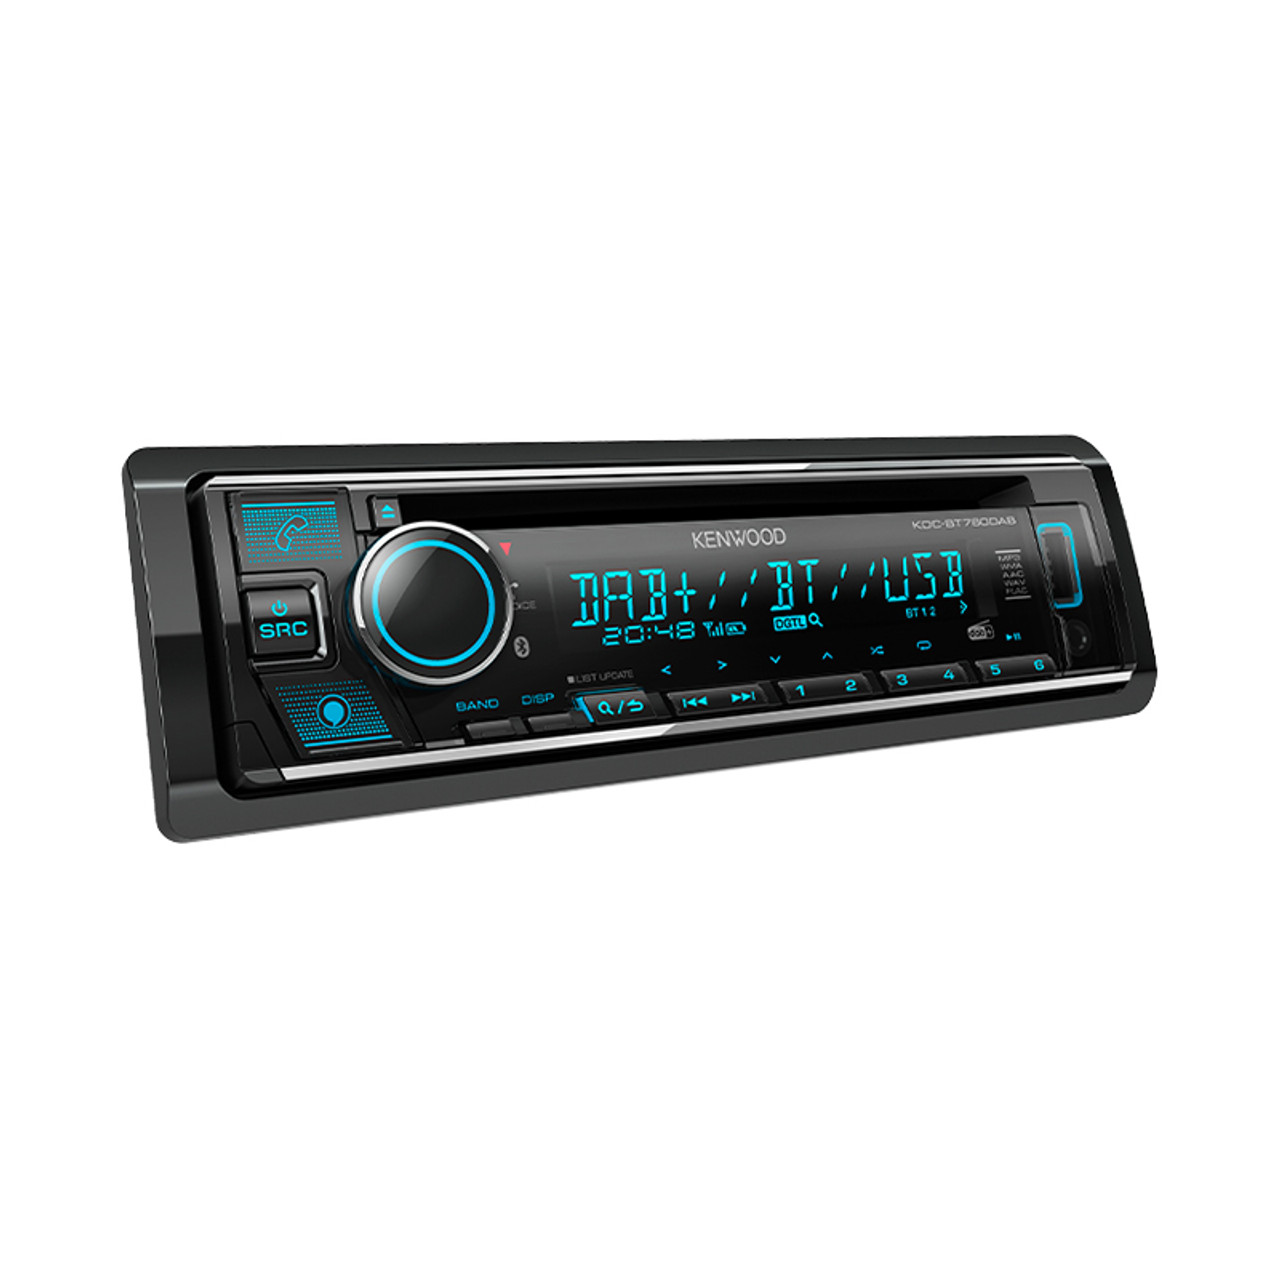 Bluetooth Car Stereo, Bluetooth Car Radio, Car Audio